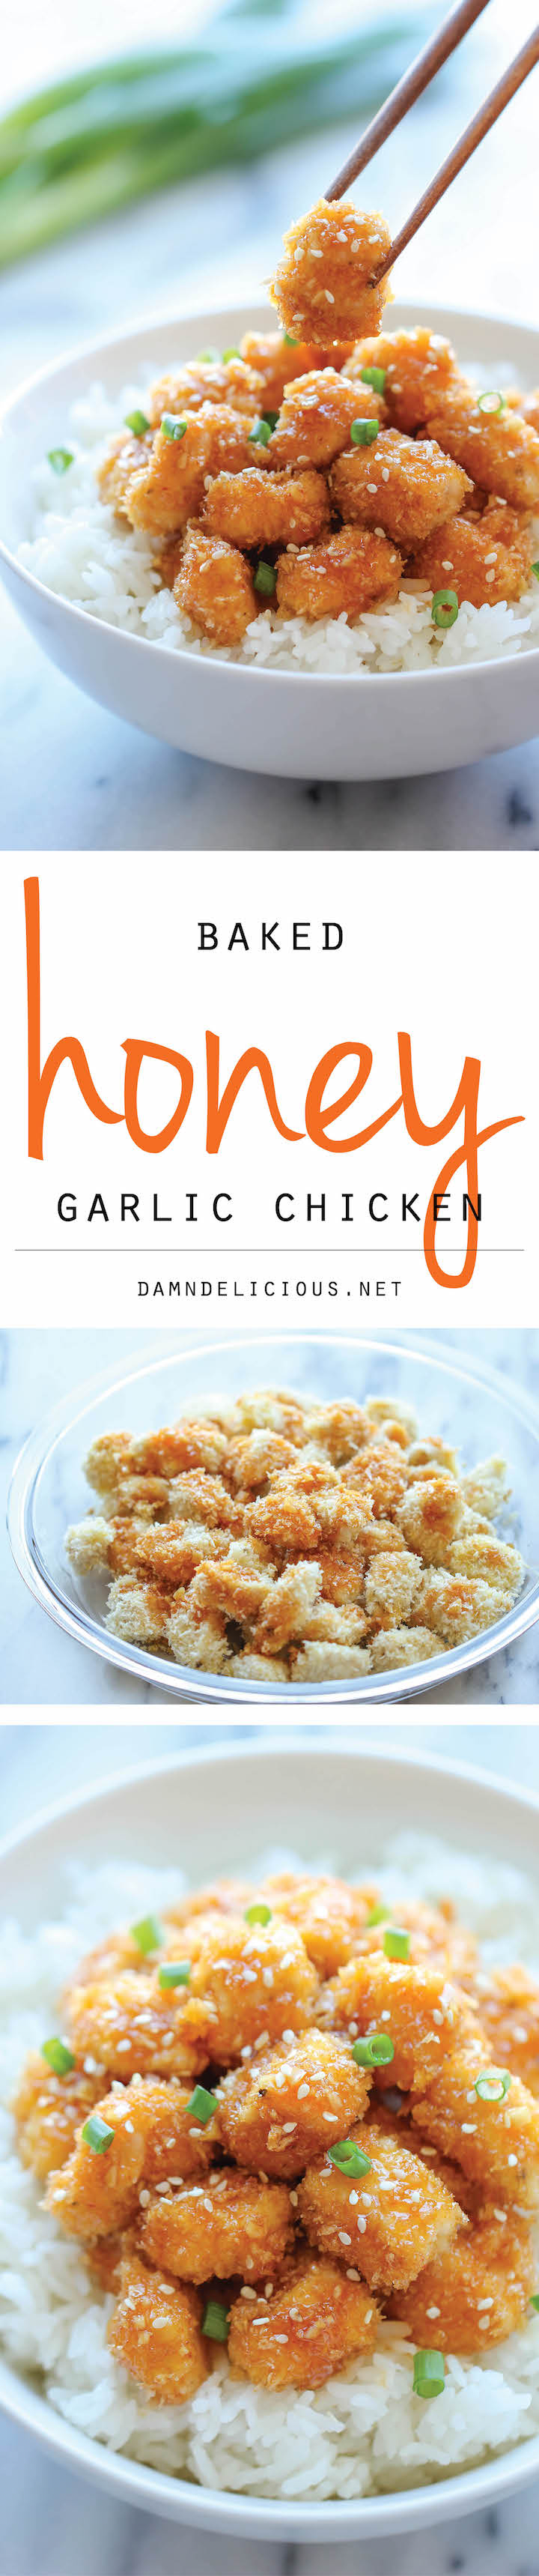 Slow Cooker Honey Garlic Chicken and Veggies - Damn Delicious